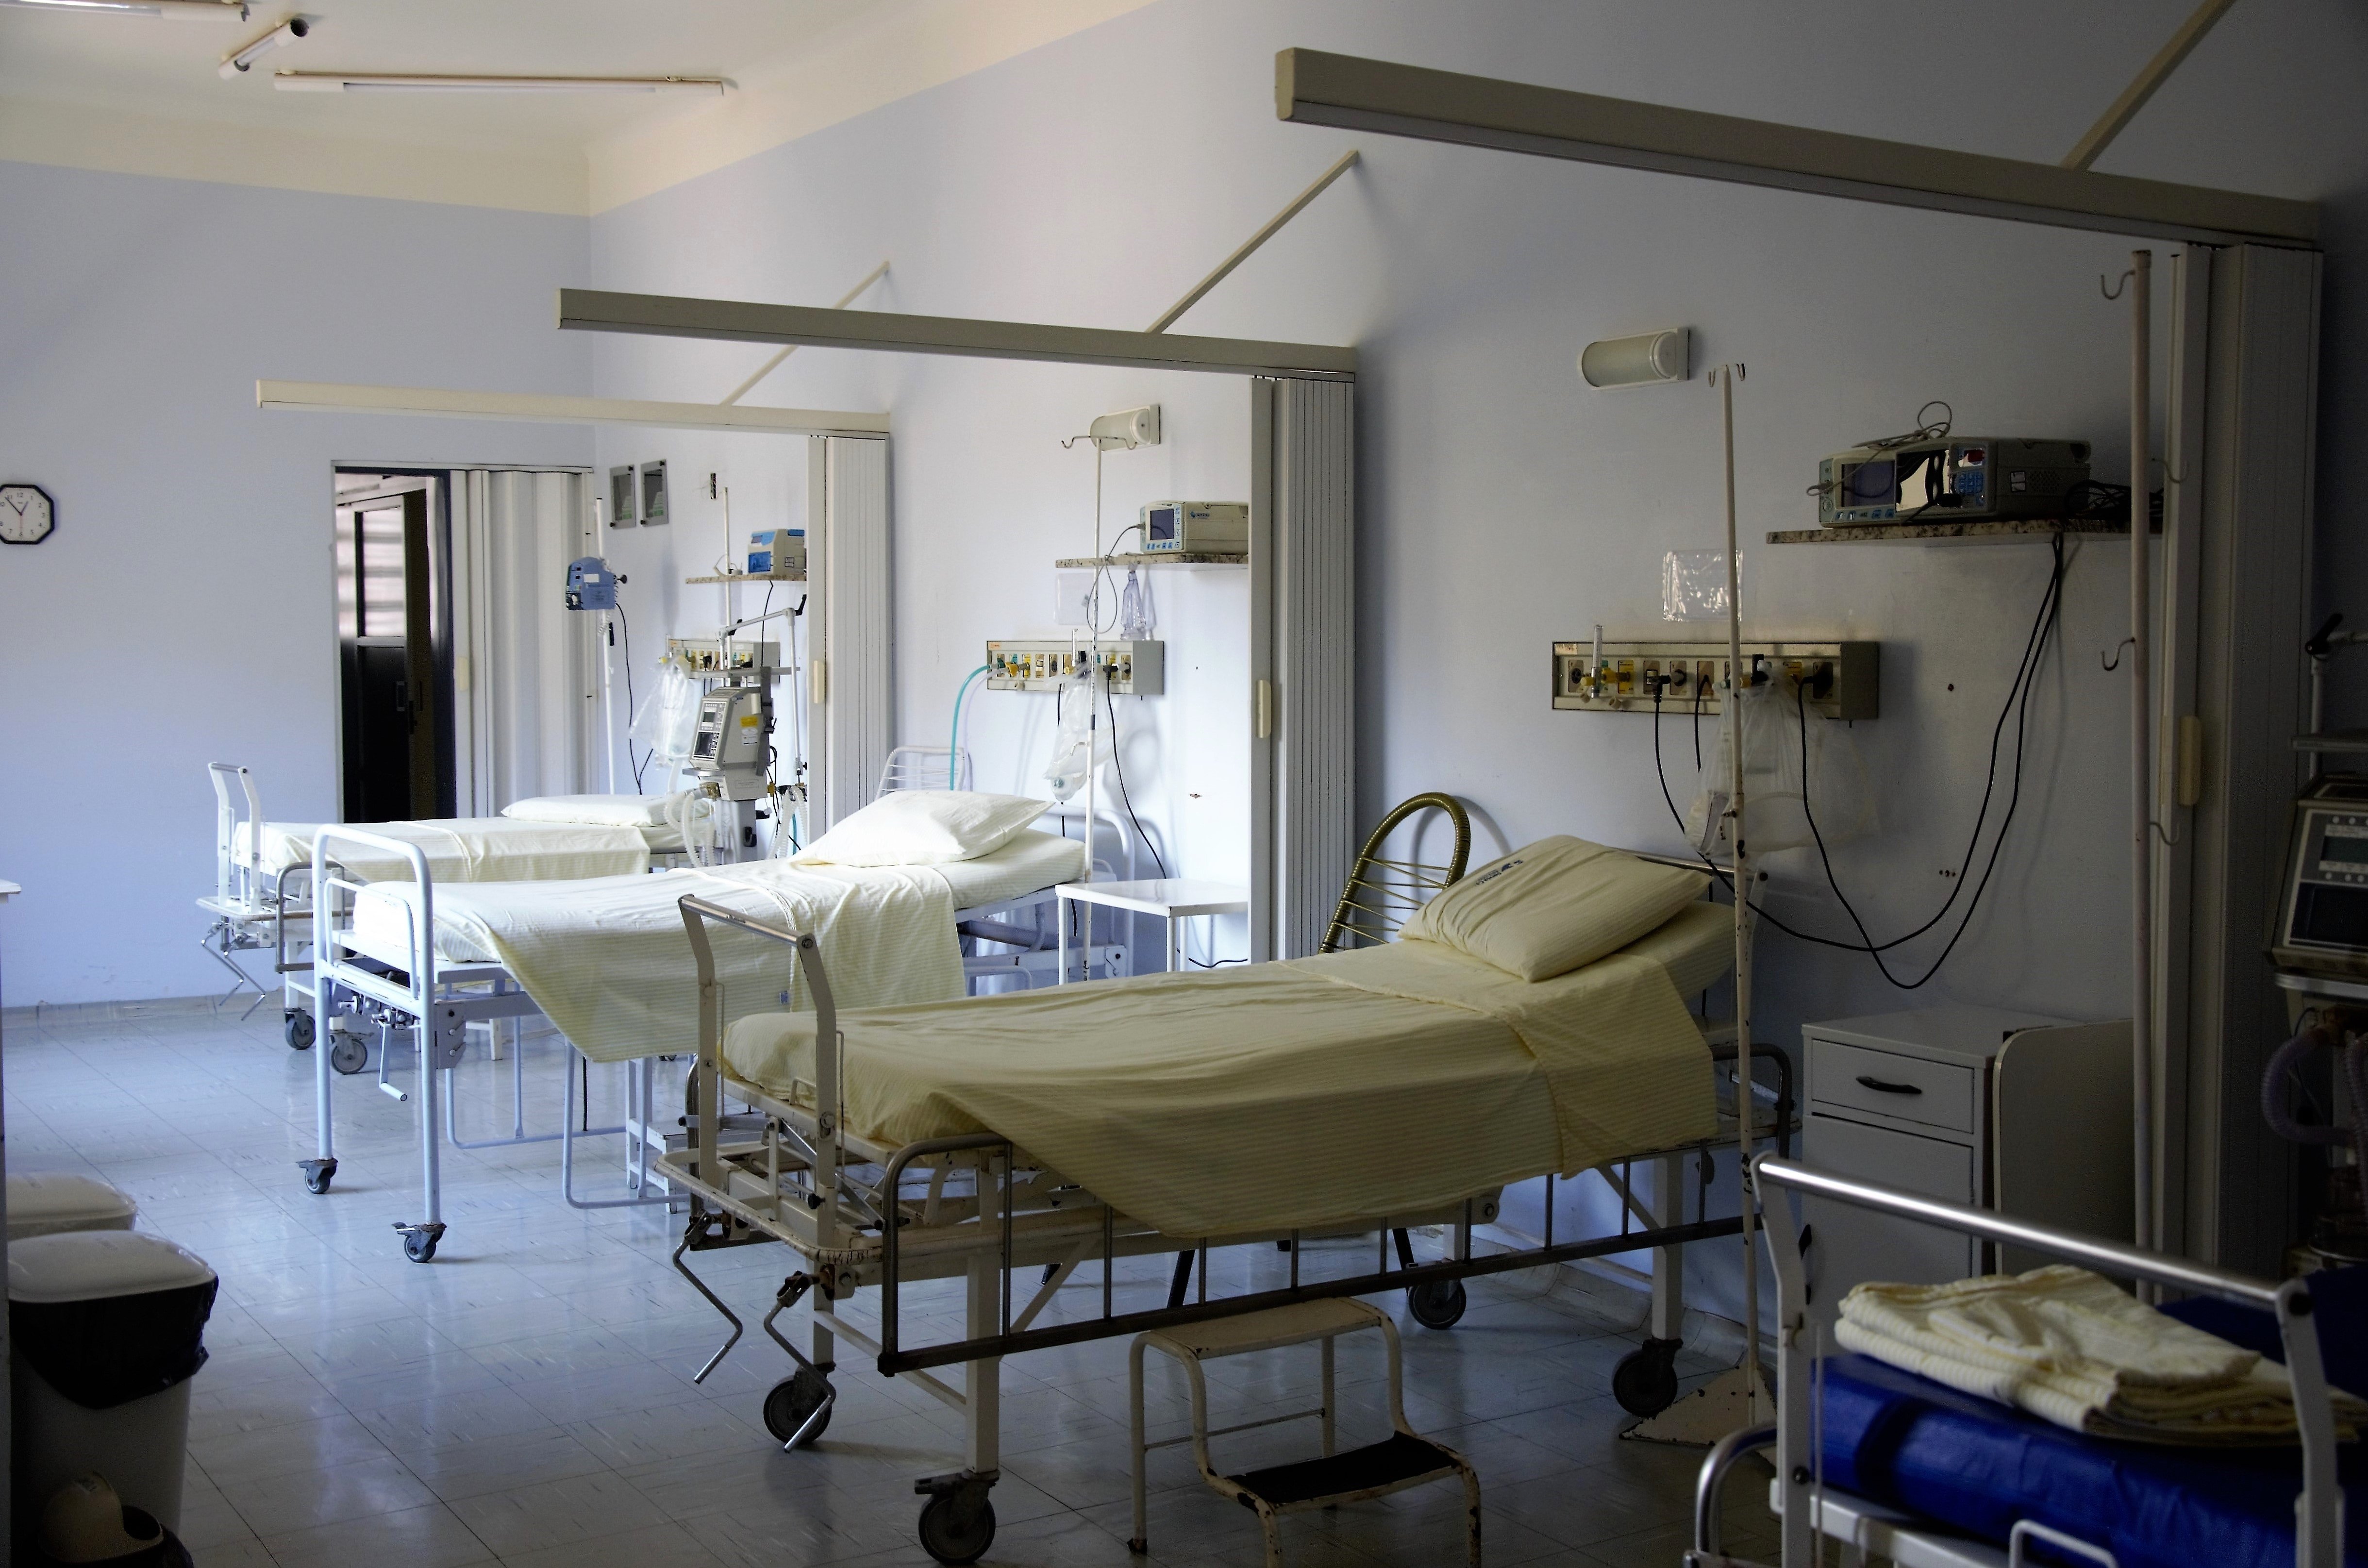 Hospital intensive care unit | Source: Pexels